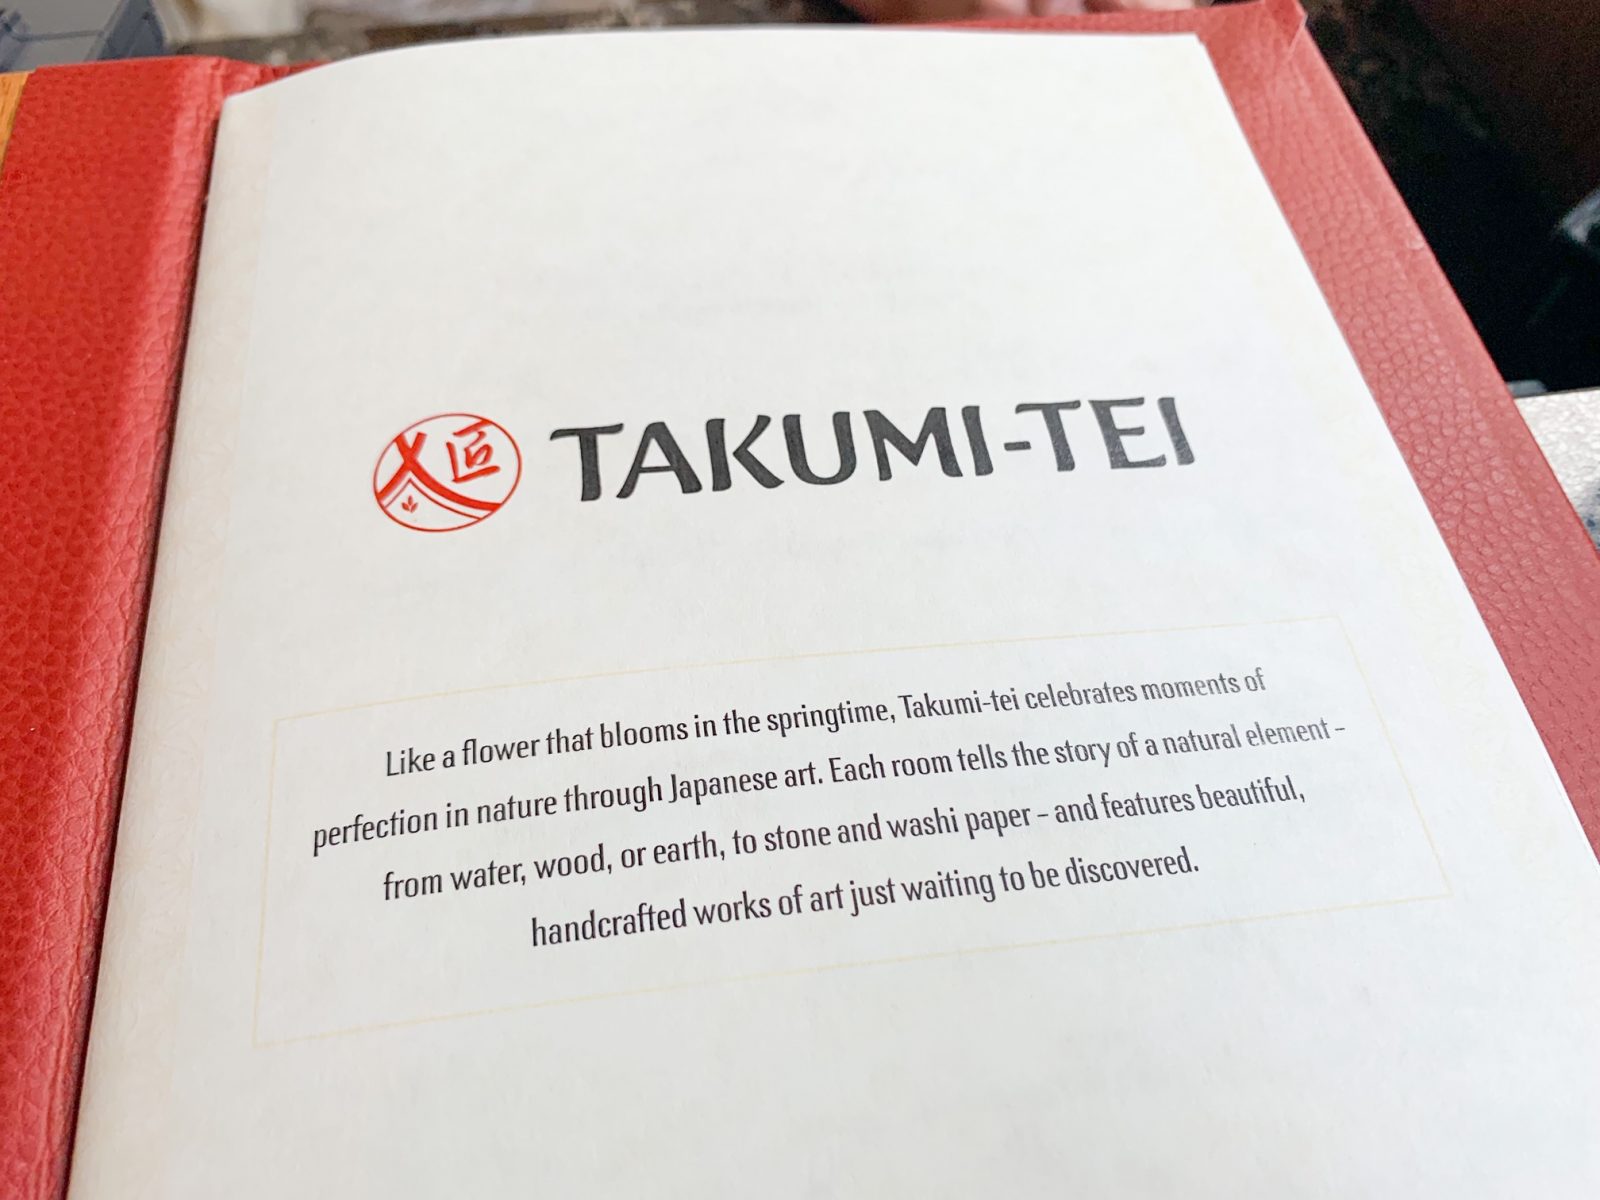 Takumi Tei Restaurant Menu at Epcot Japan